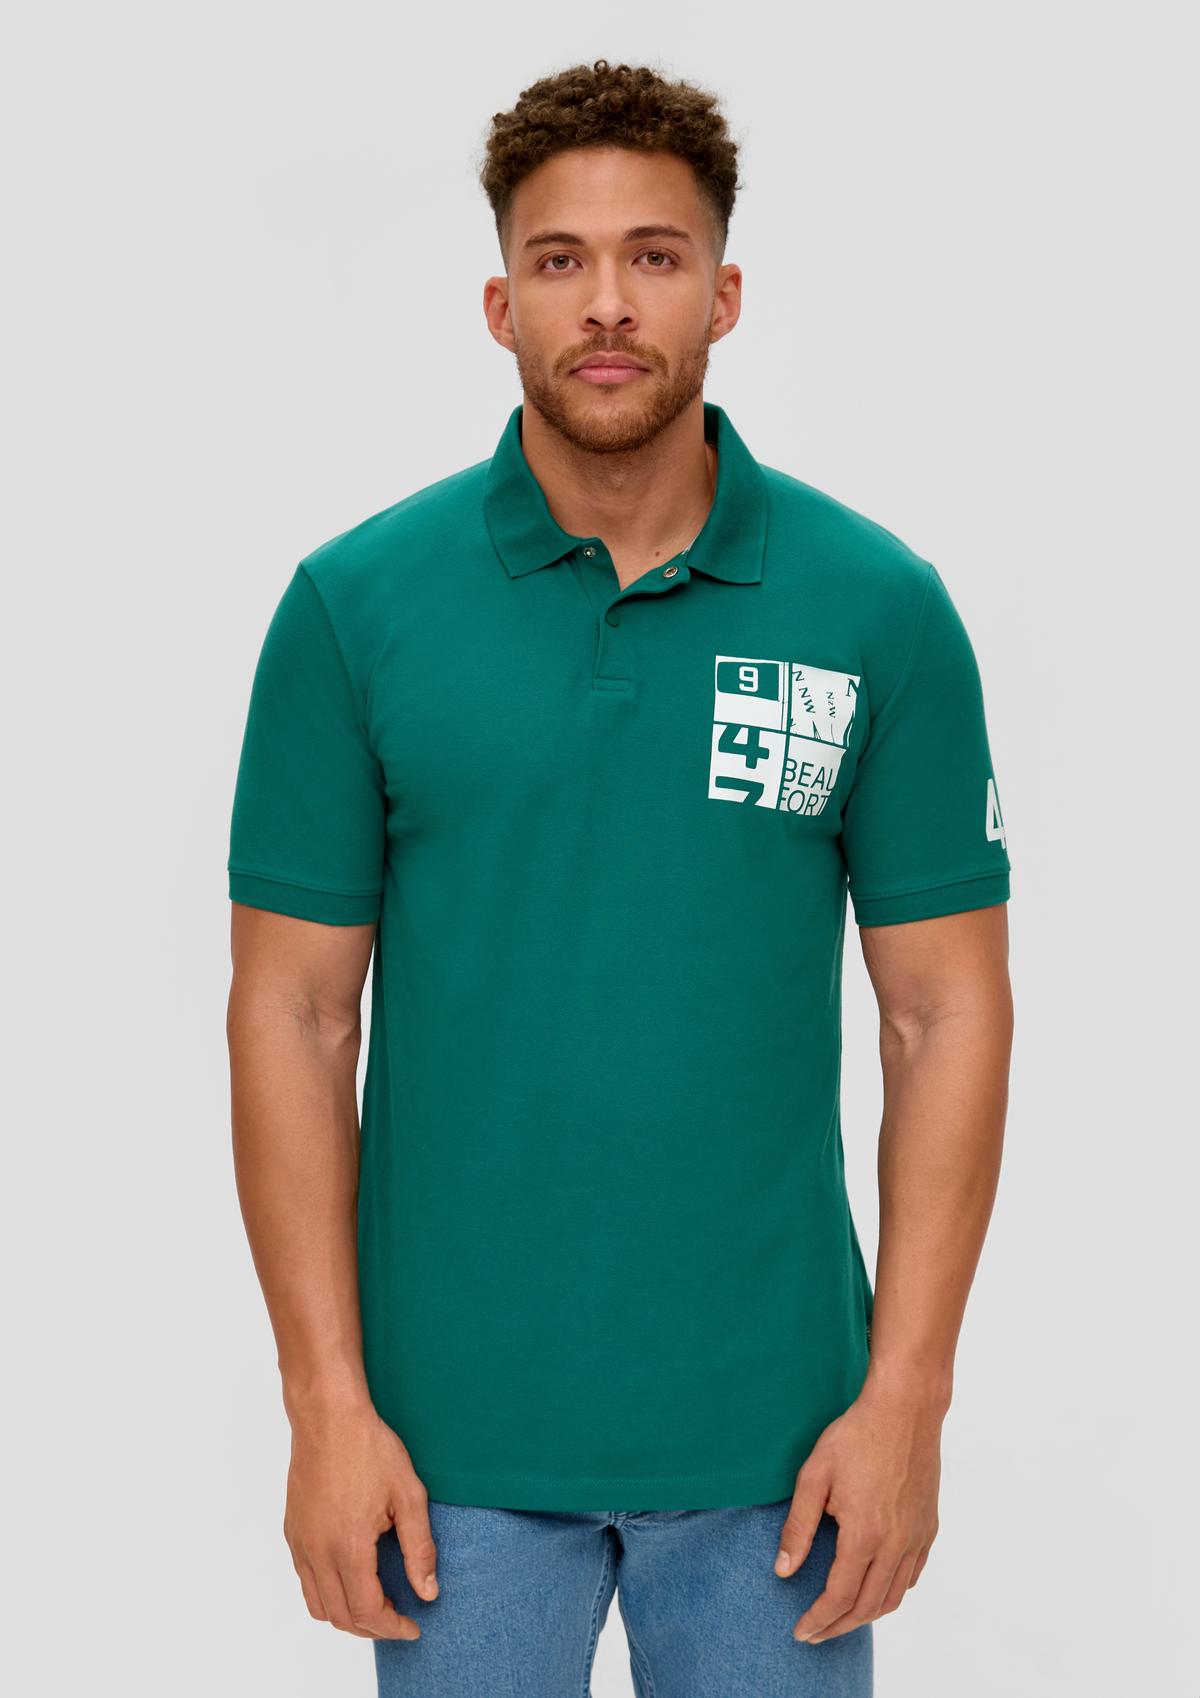 Polo shirt with a minimalist - print navy